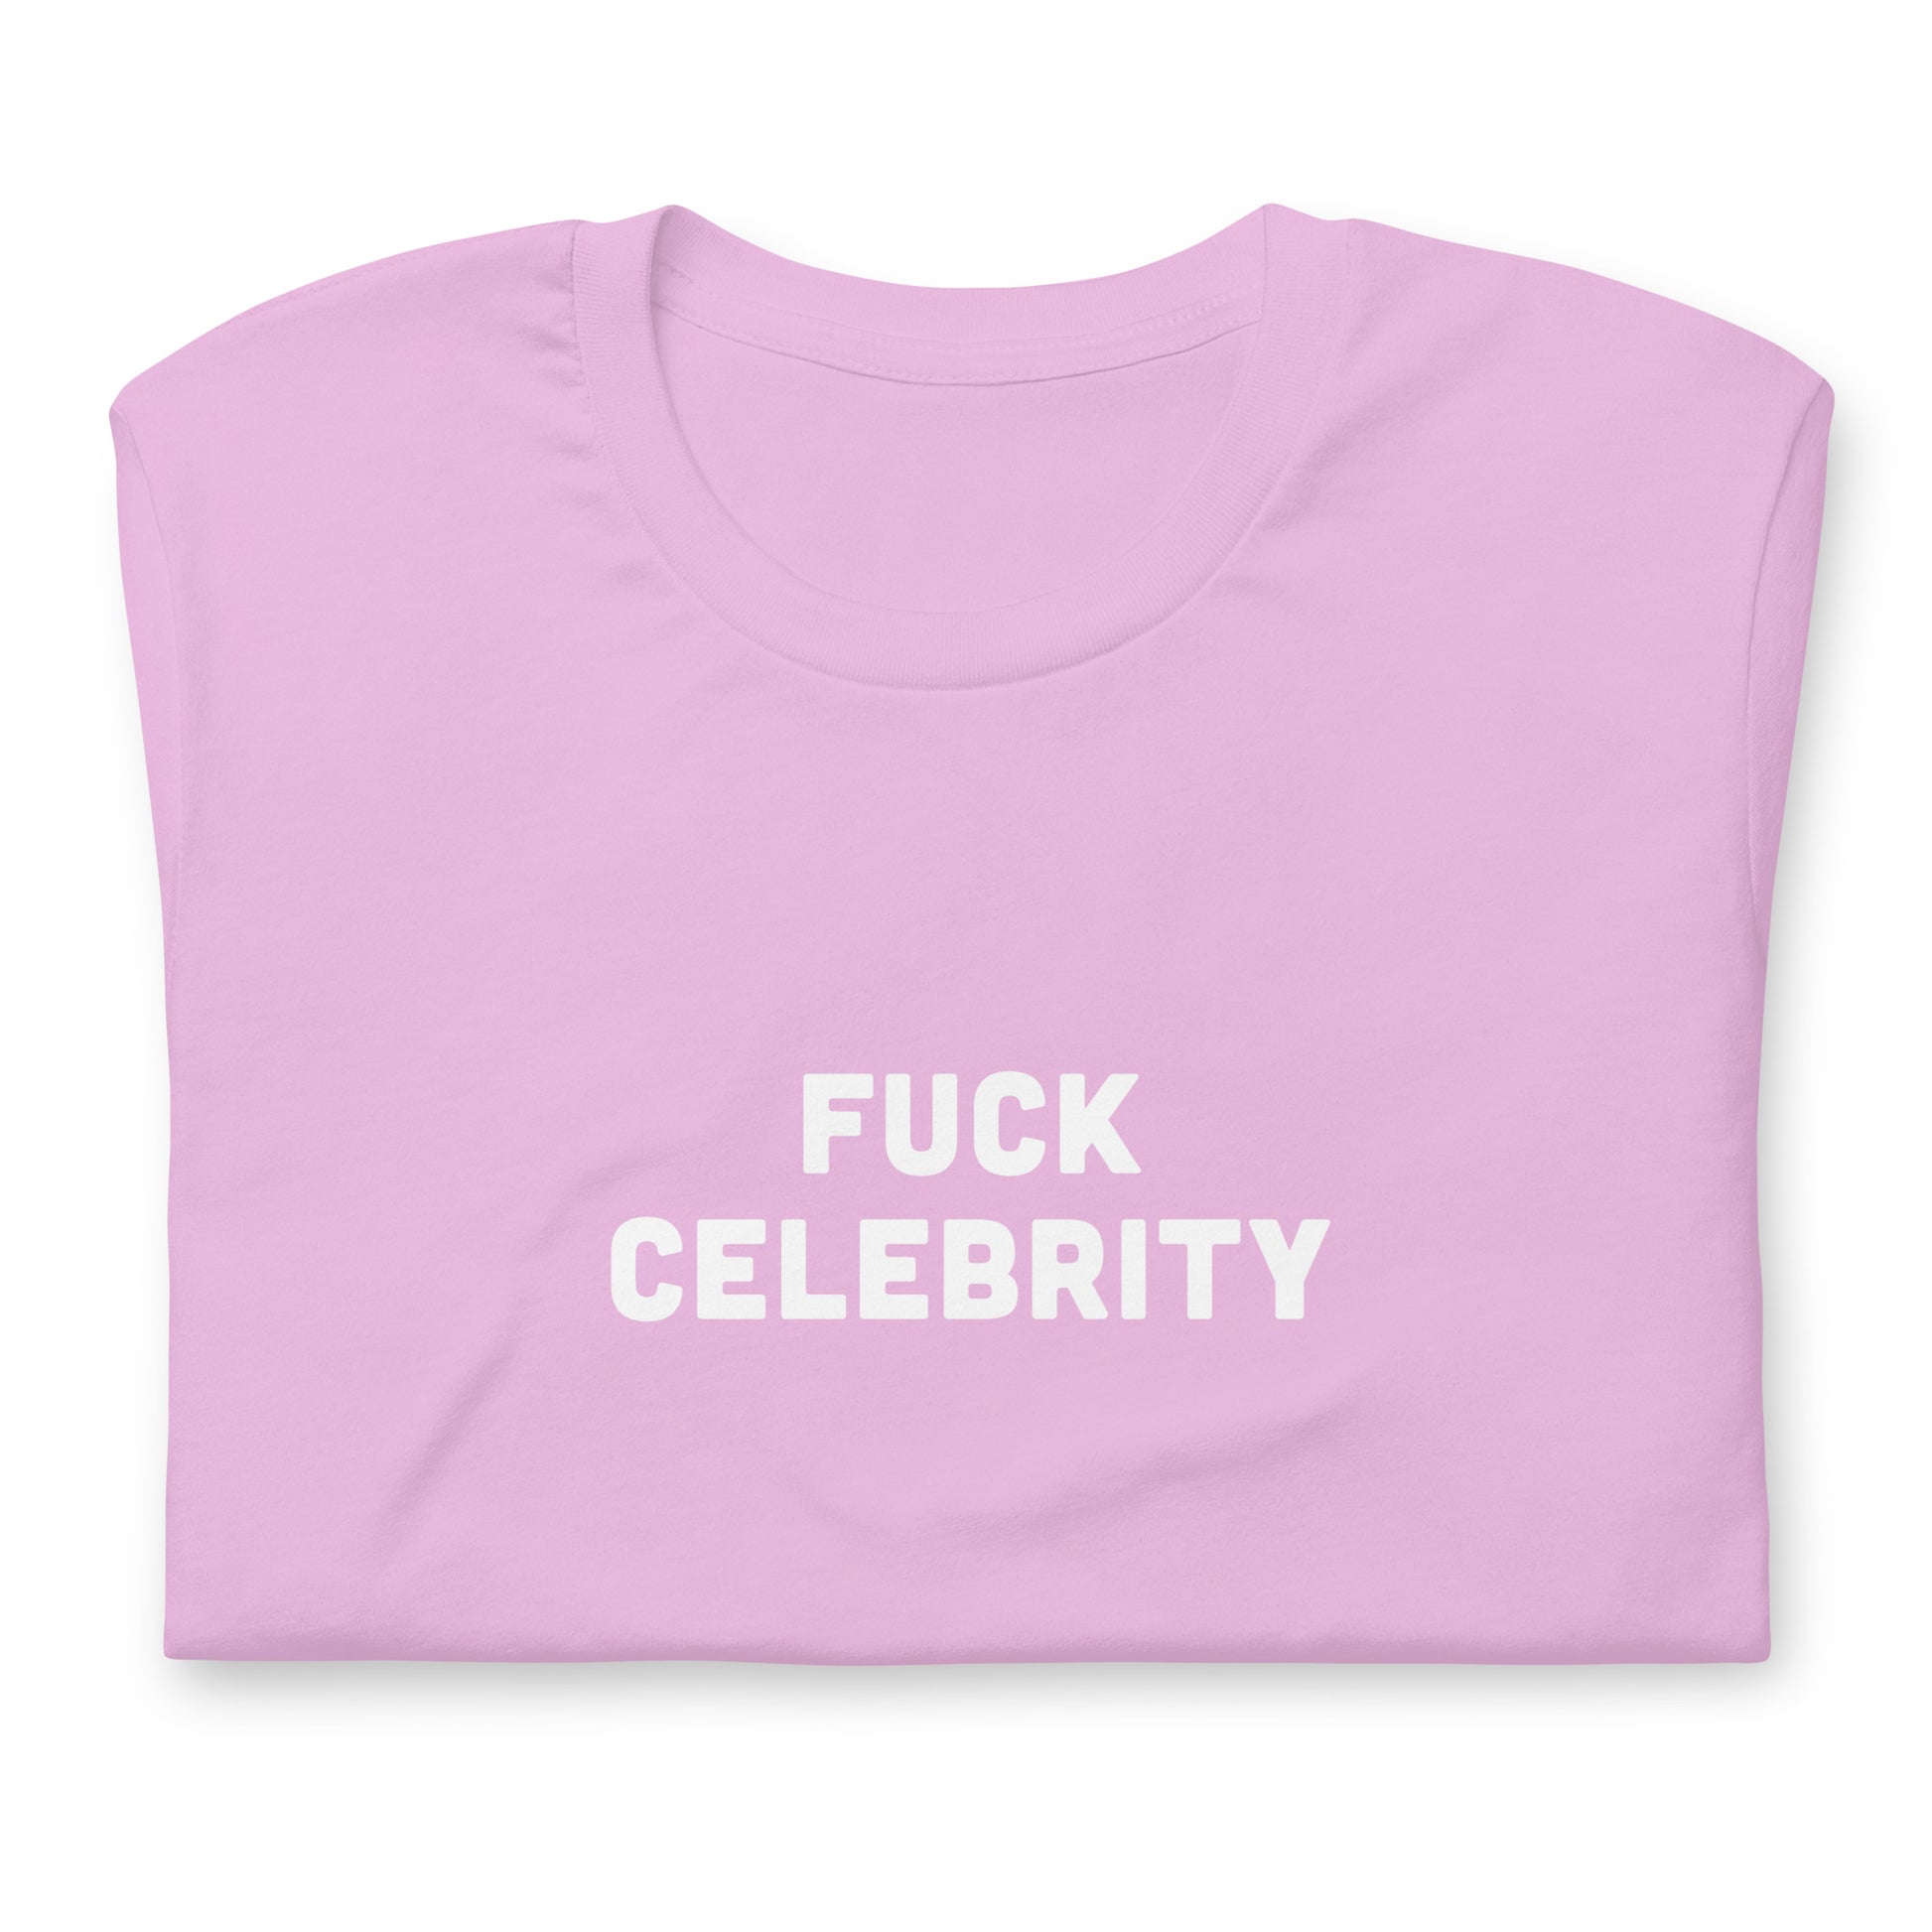 Fuck Celebrity T-Shirt Size 2XL Color Forest